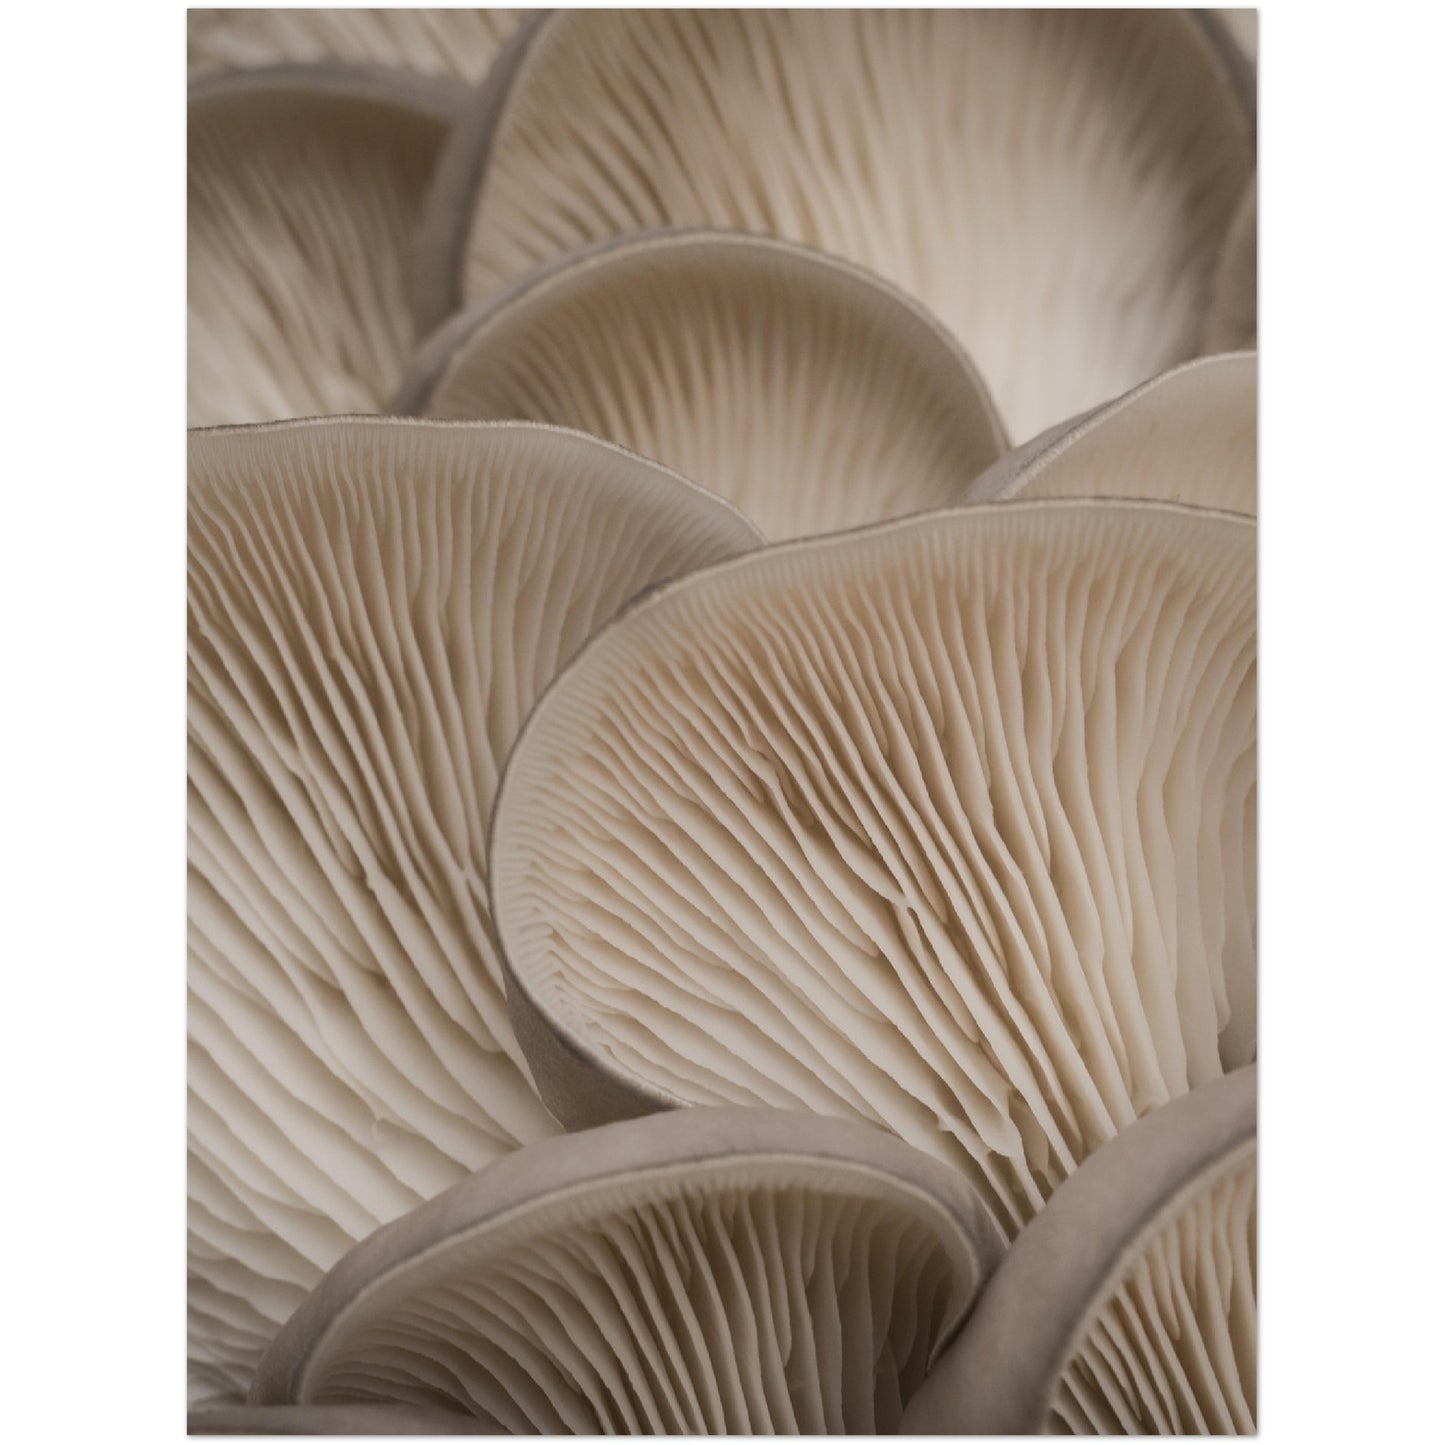 Oyster Mushrooms Print